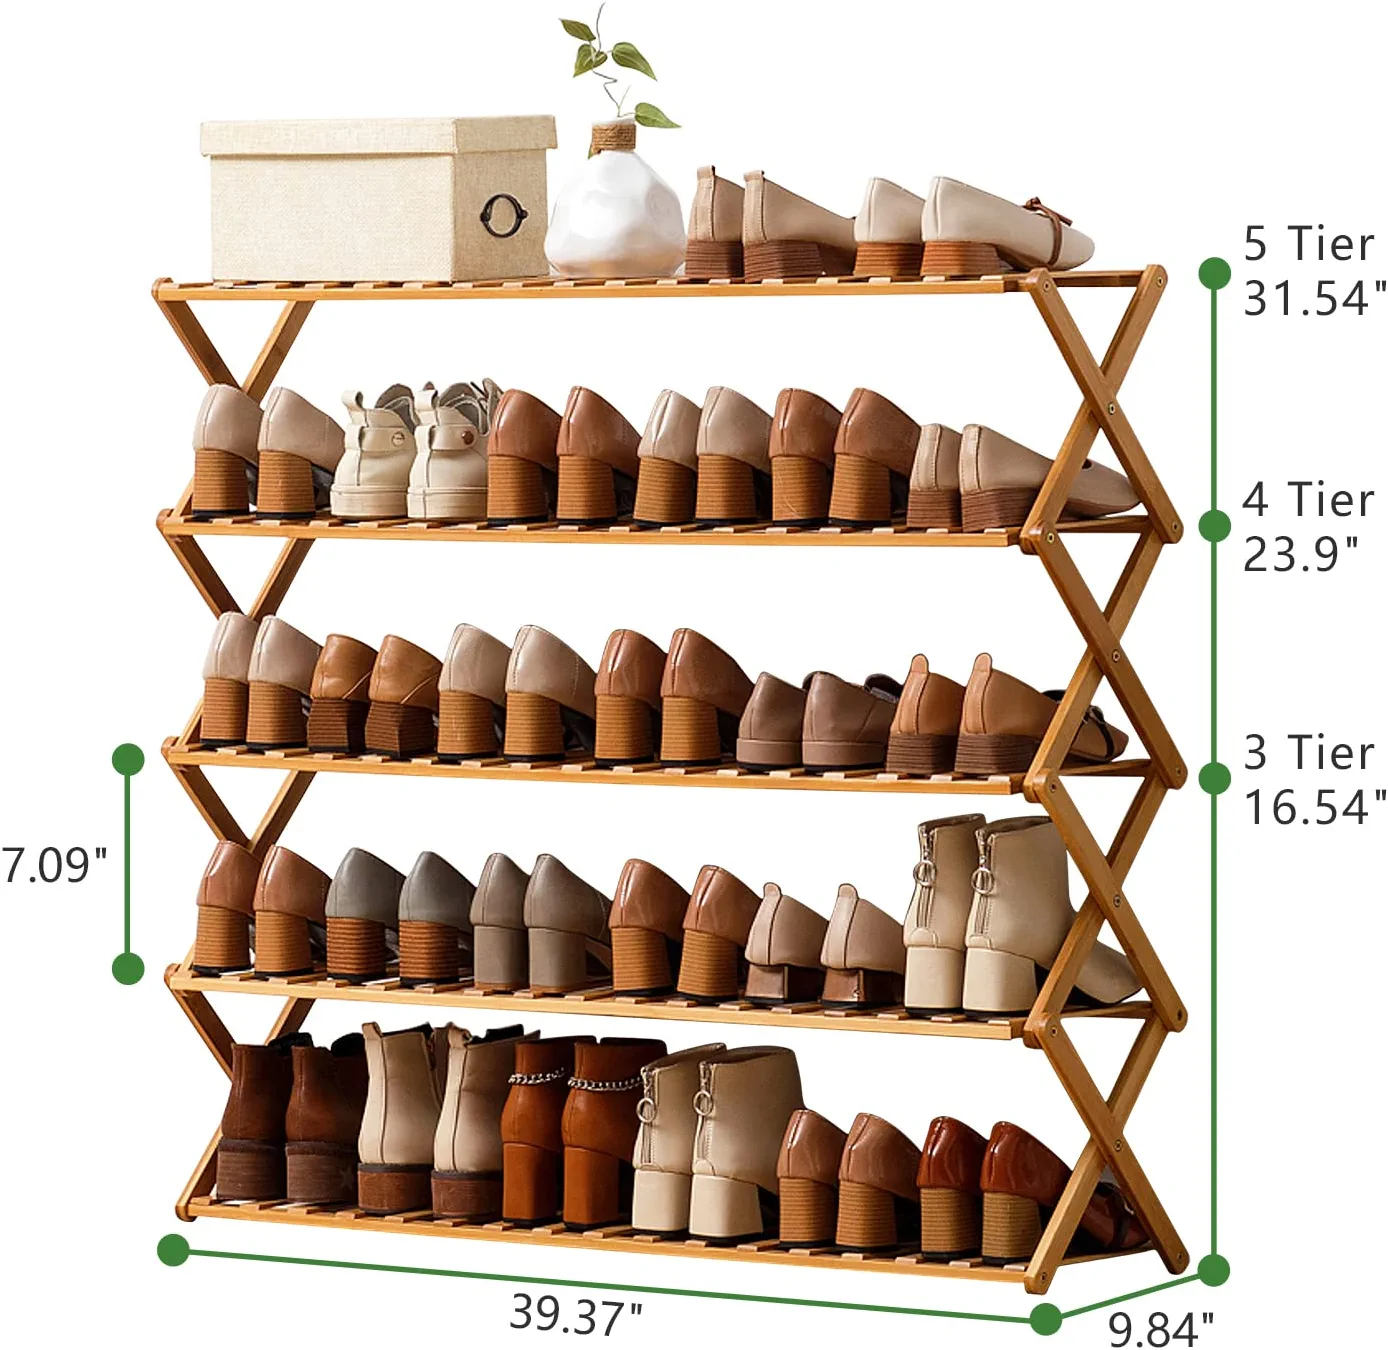 Cómo construir un estante barato para zapatos - 3 pasos